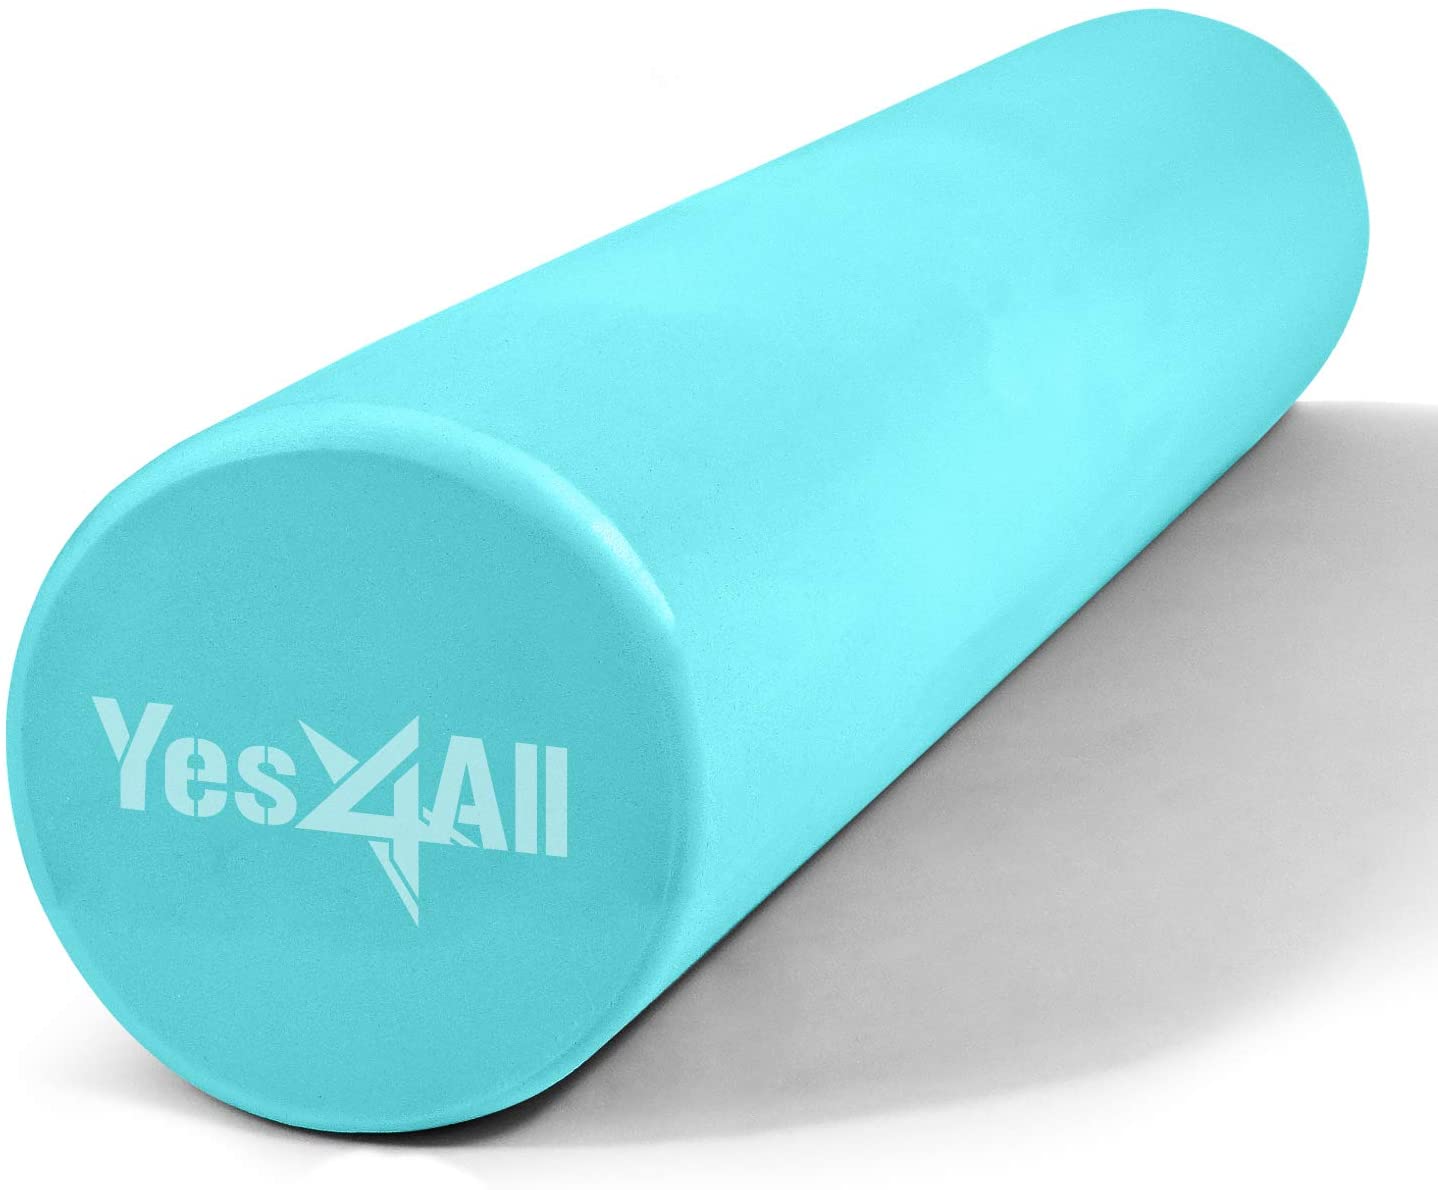 Aqua foam roller with yes4all logo